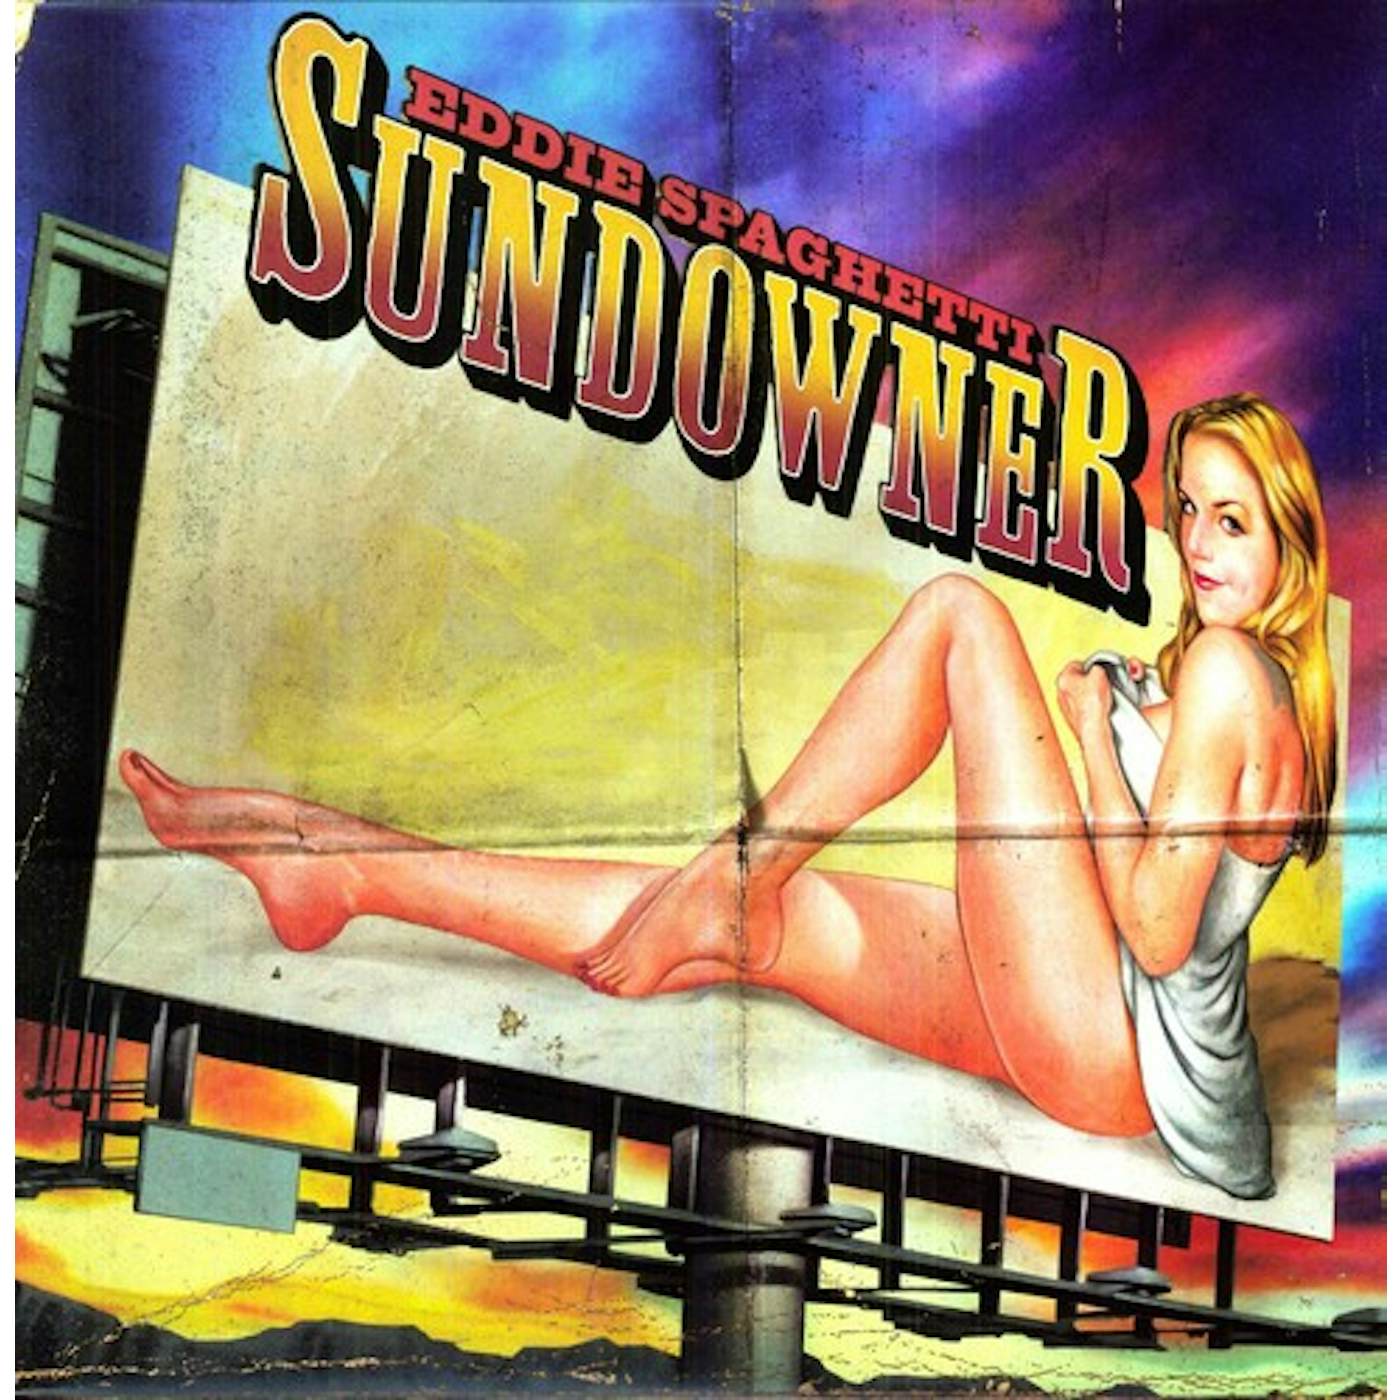 Eddie Spaghetti Sundowner Vinyl Record